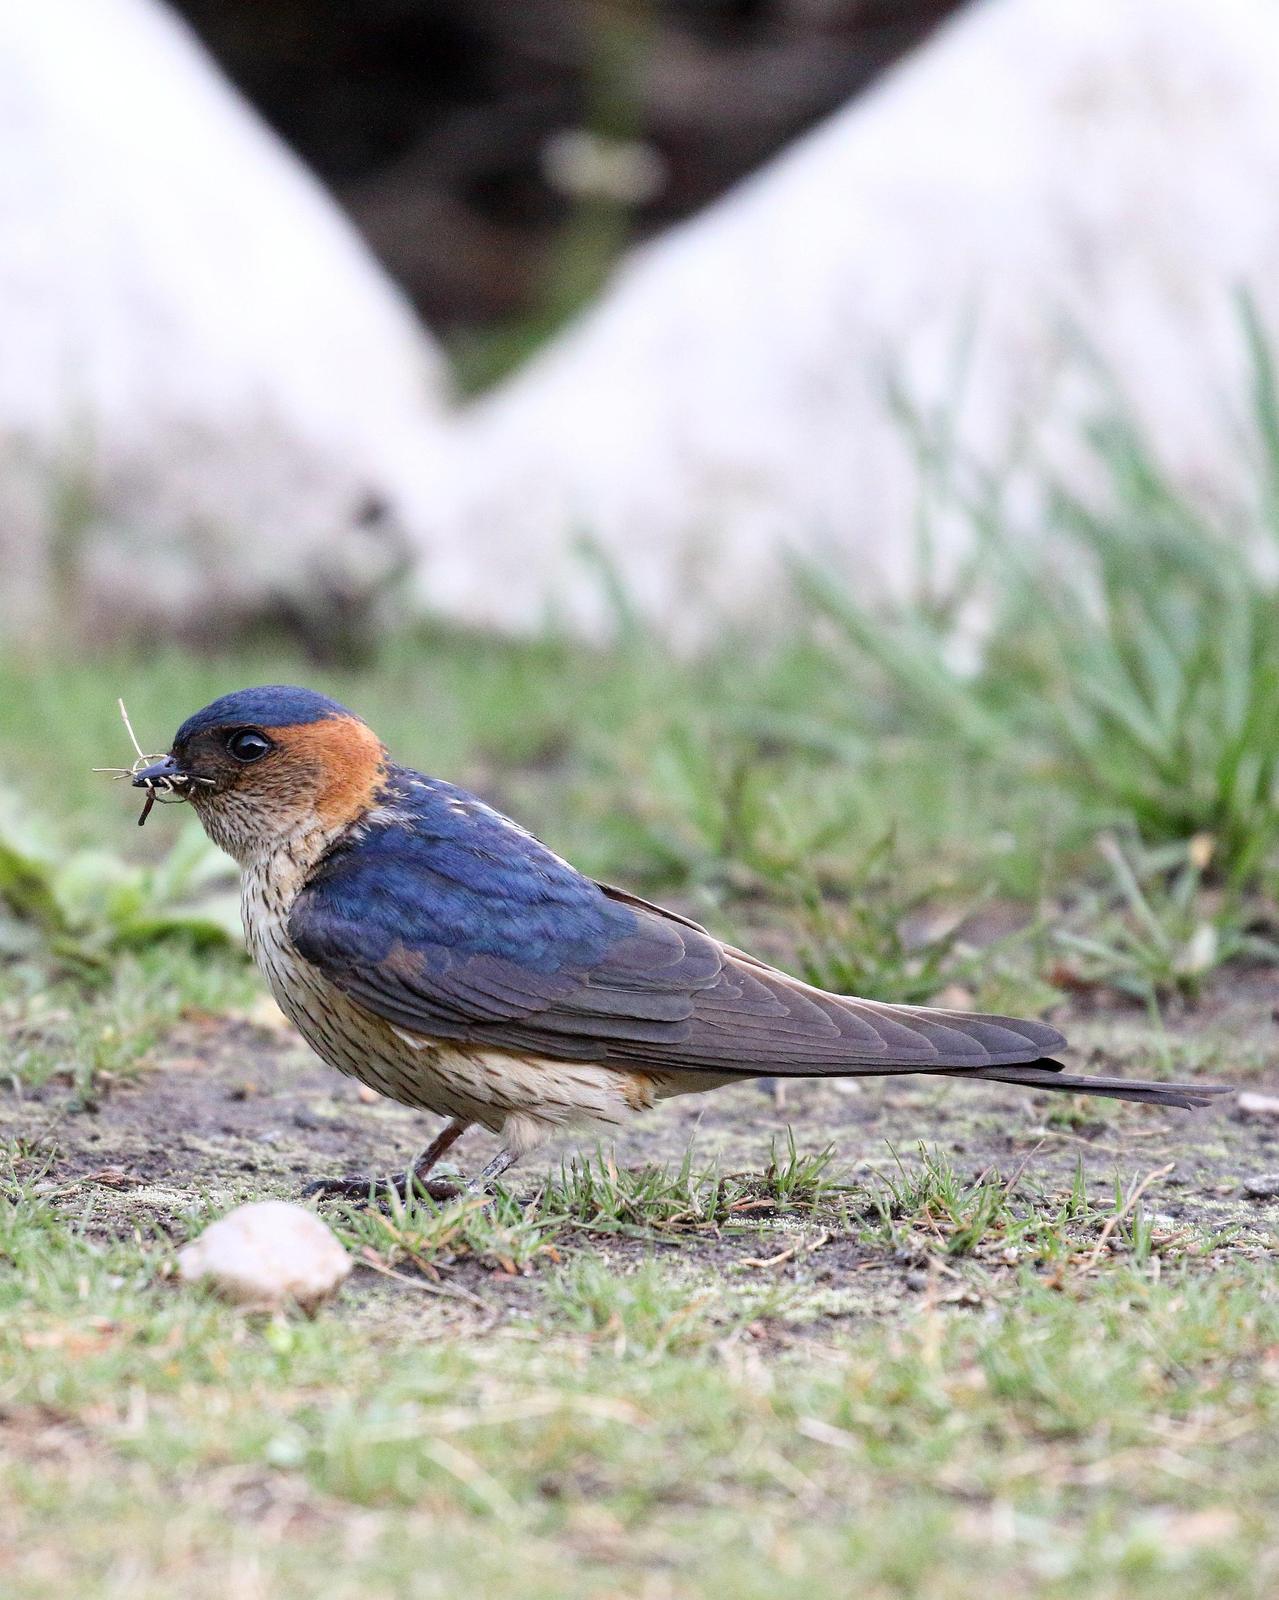 Red-rumped Swallow Photo by Rahul Kaushik